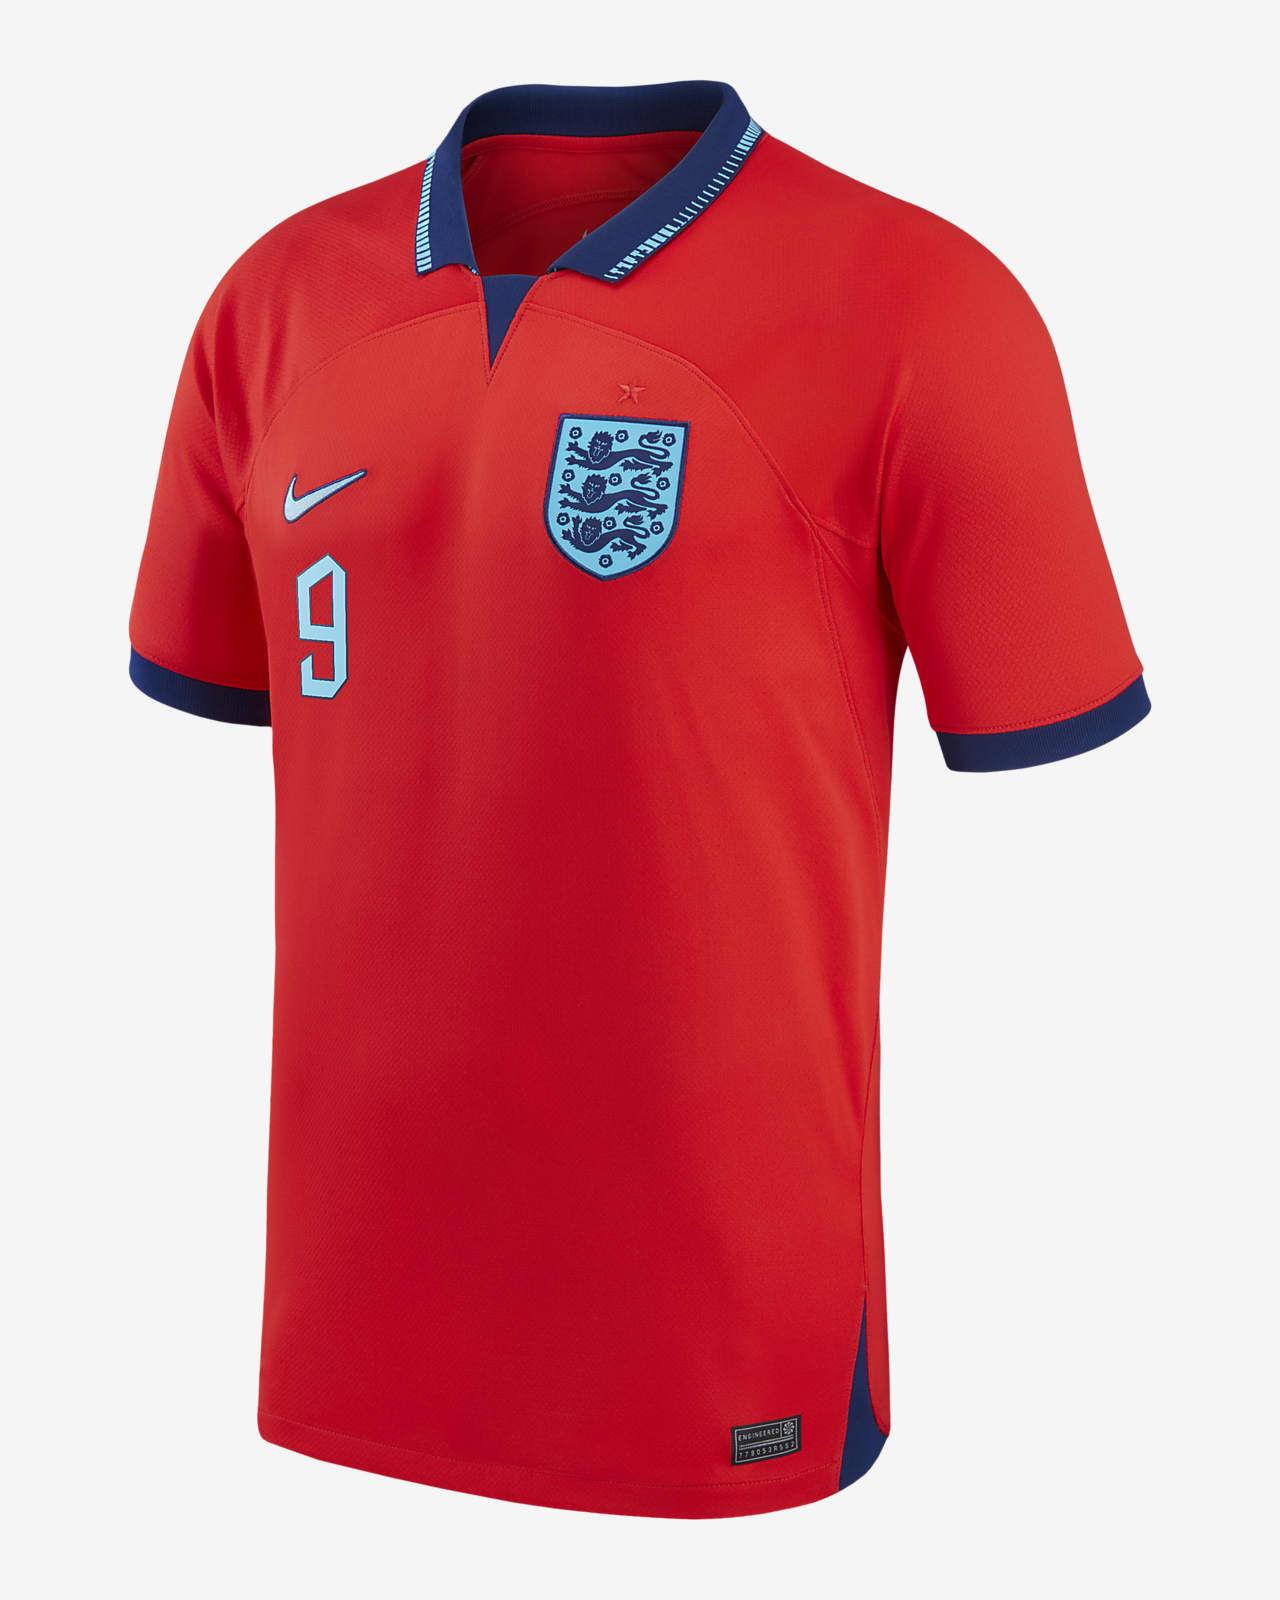 england national team jersey